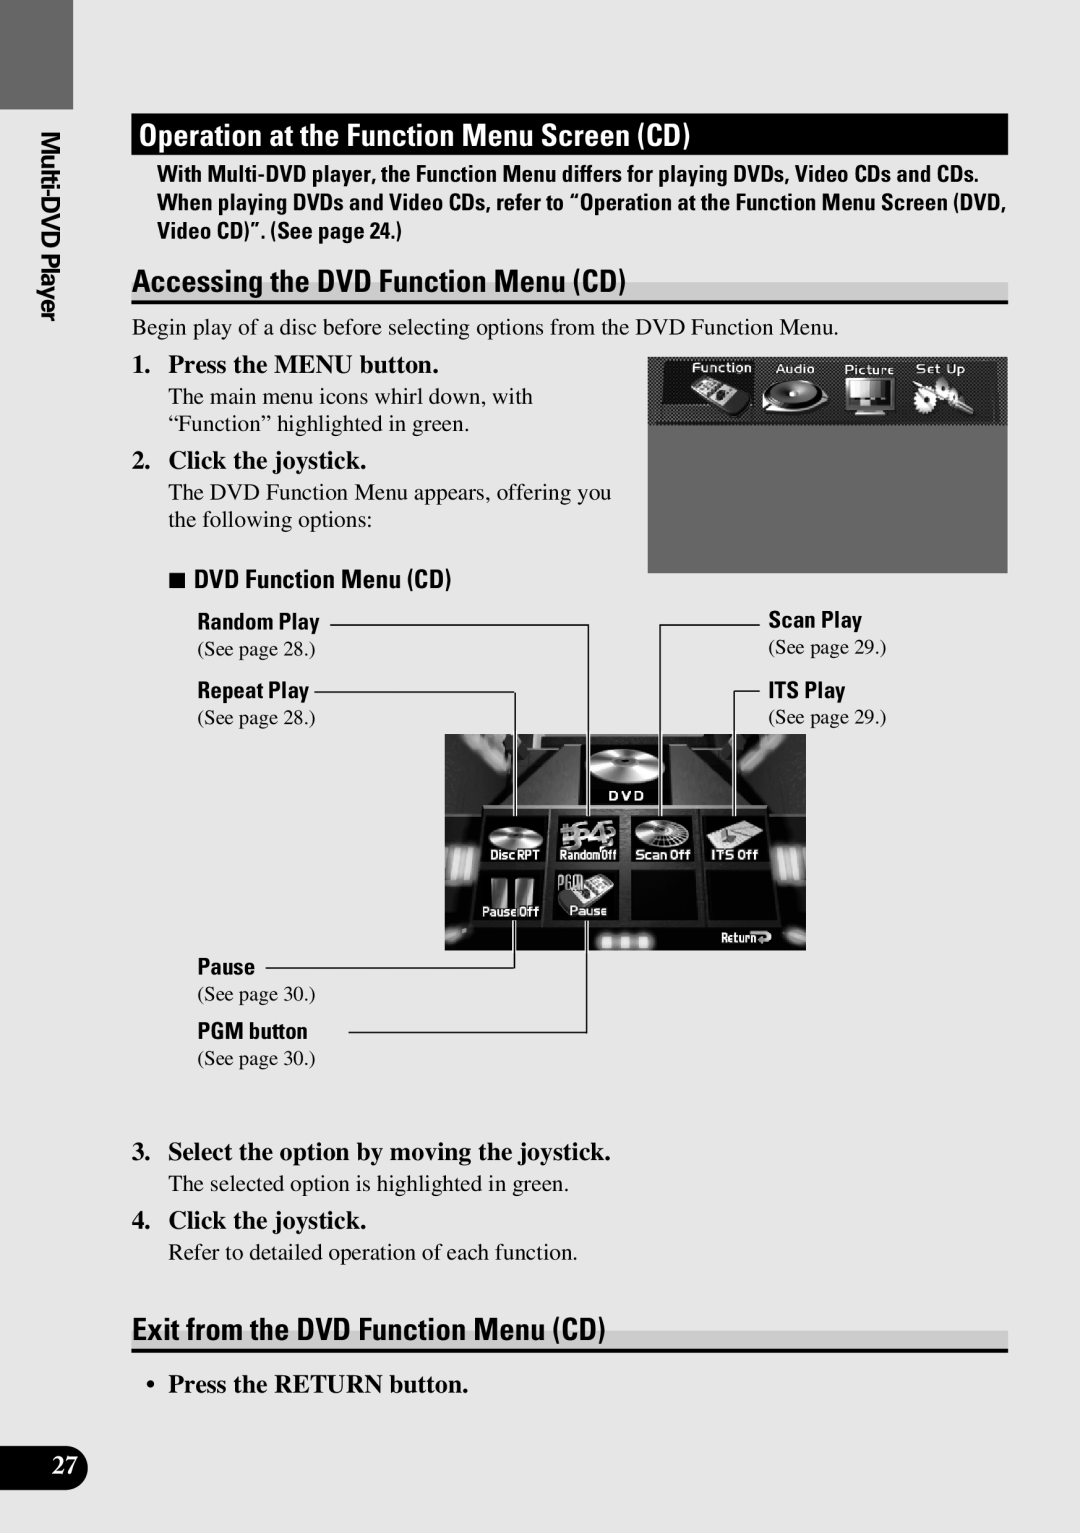 Pioneer AVM-P9000 Operation at the Function Menu Screen CD, Accessing the DVD Function Menu CD, 7DVD Function Menu CD 